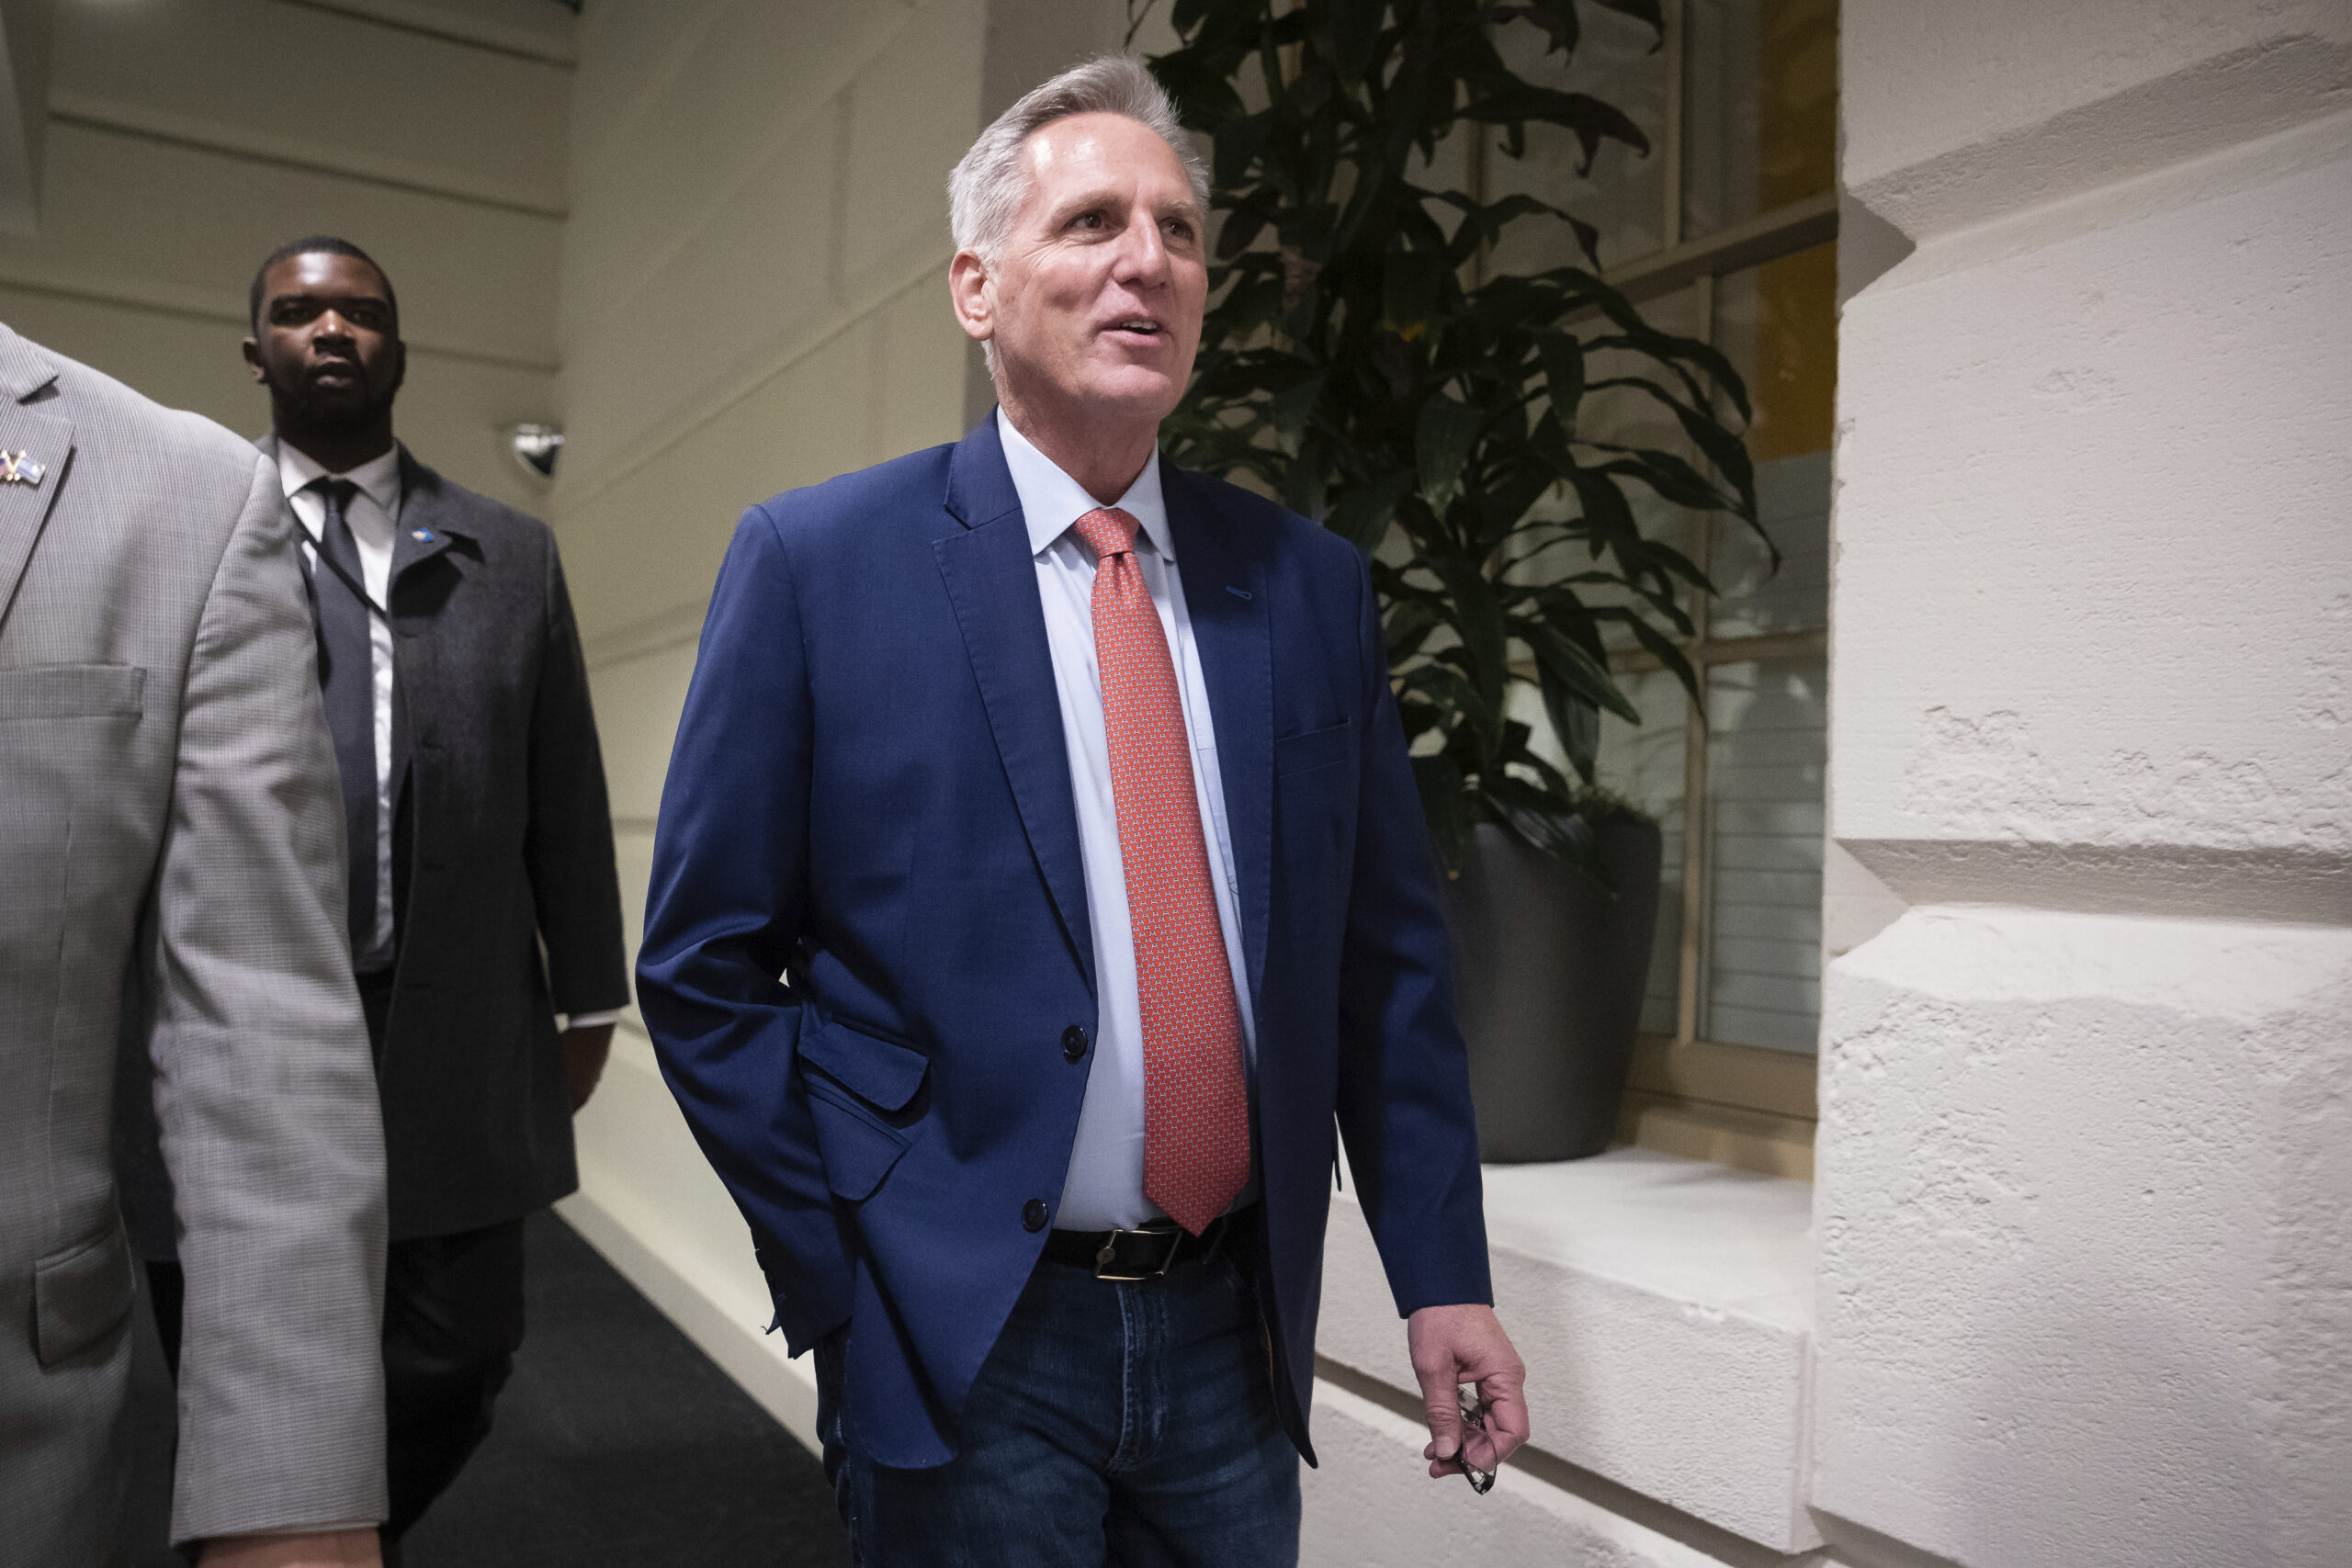 McCarthy’s chosen successor faces legal challenge